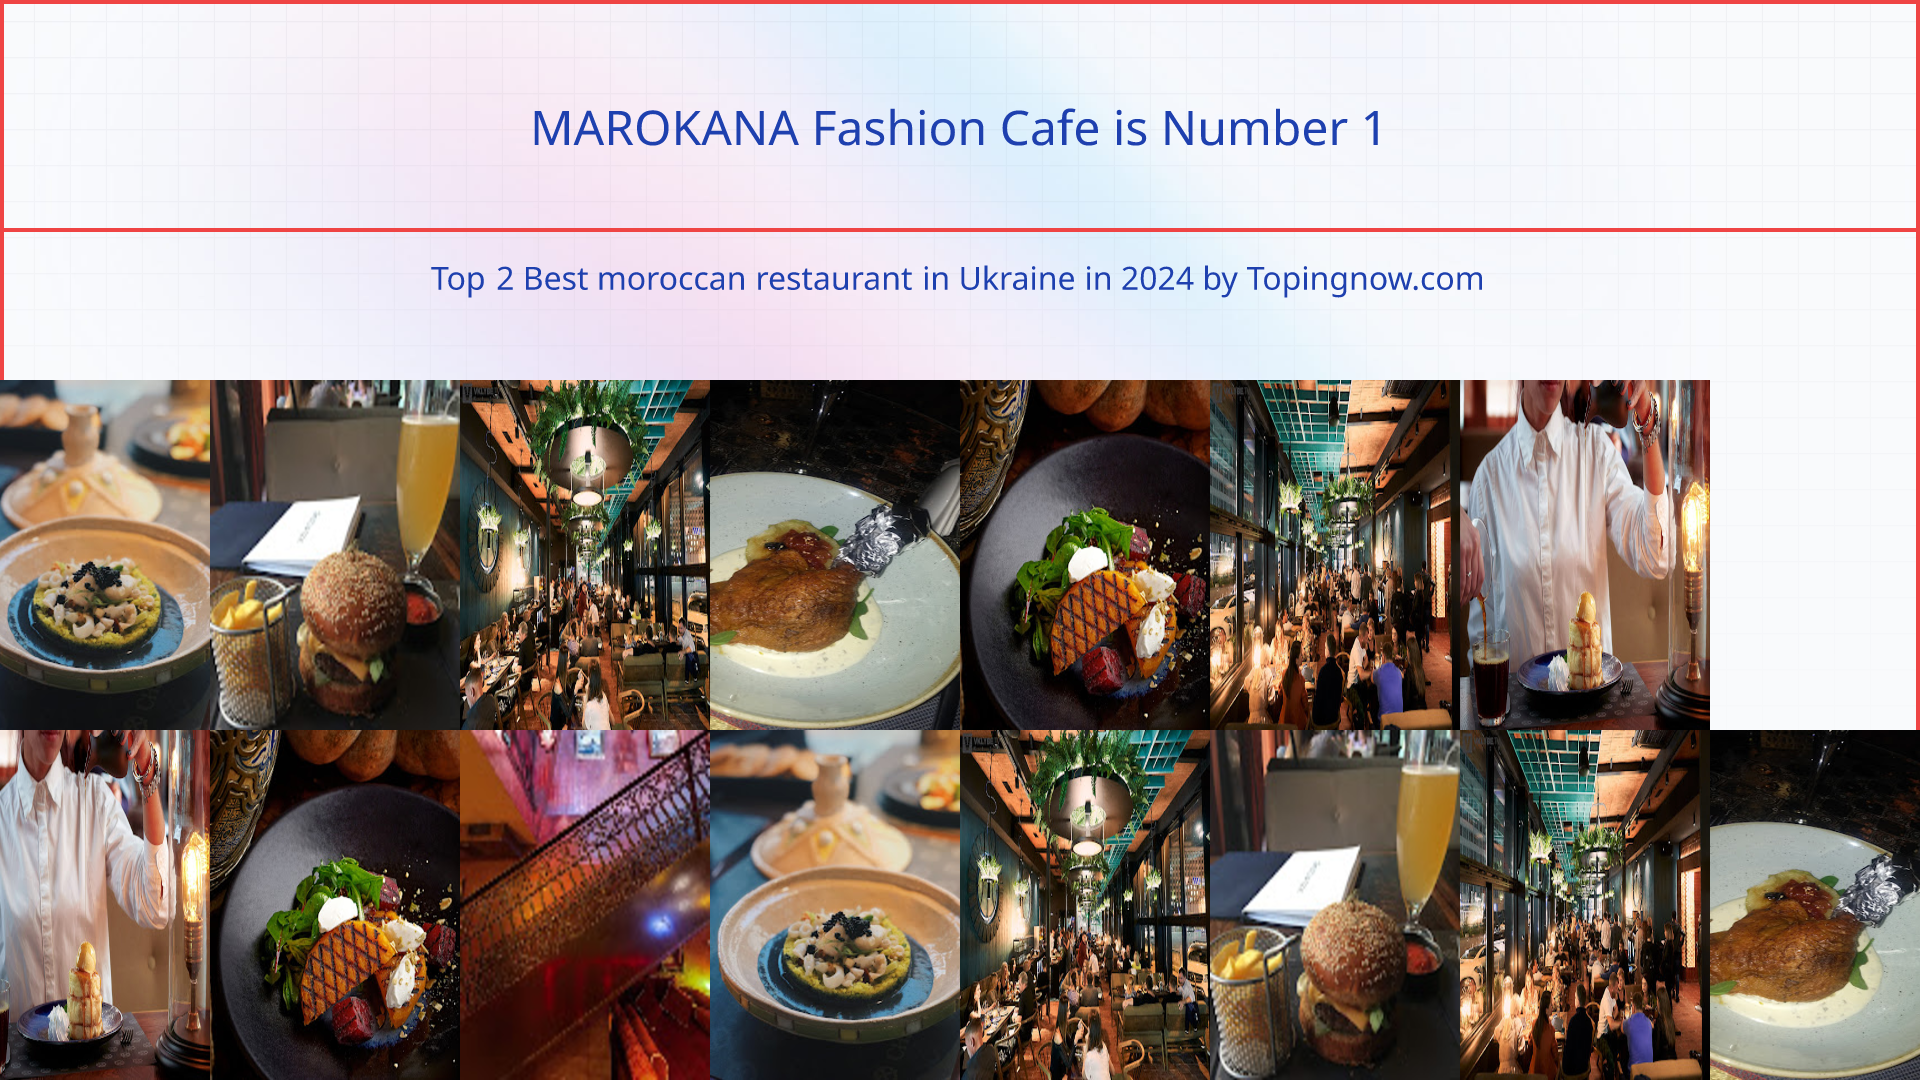 MAROKANA Fashion Cafe: Top 2 Best moroccan restaurant in Ukraine in 2024